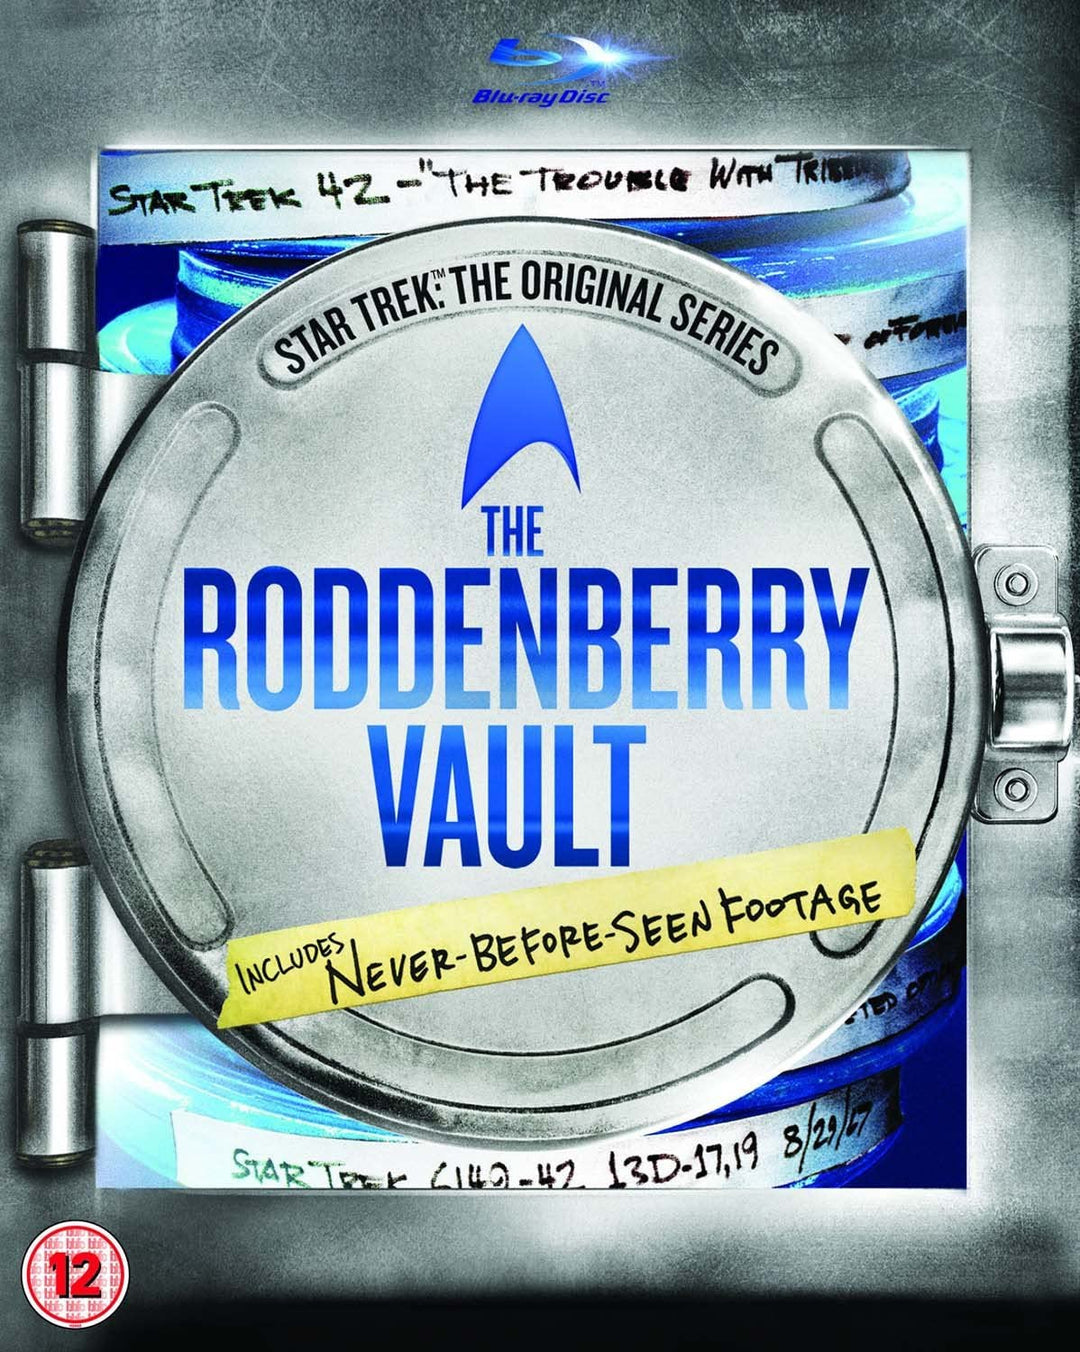 Star Trek: The Original Series - The Roddenberry Vault [Blu-ray] [2016] [Region